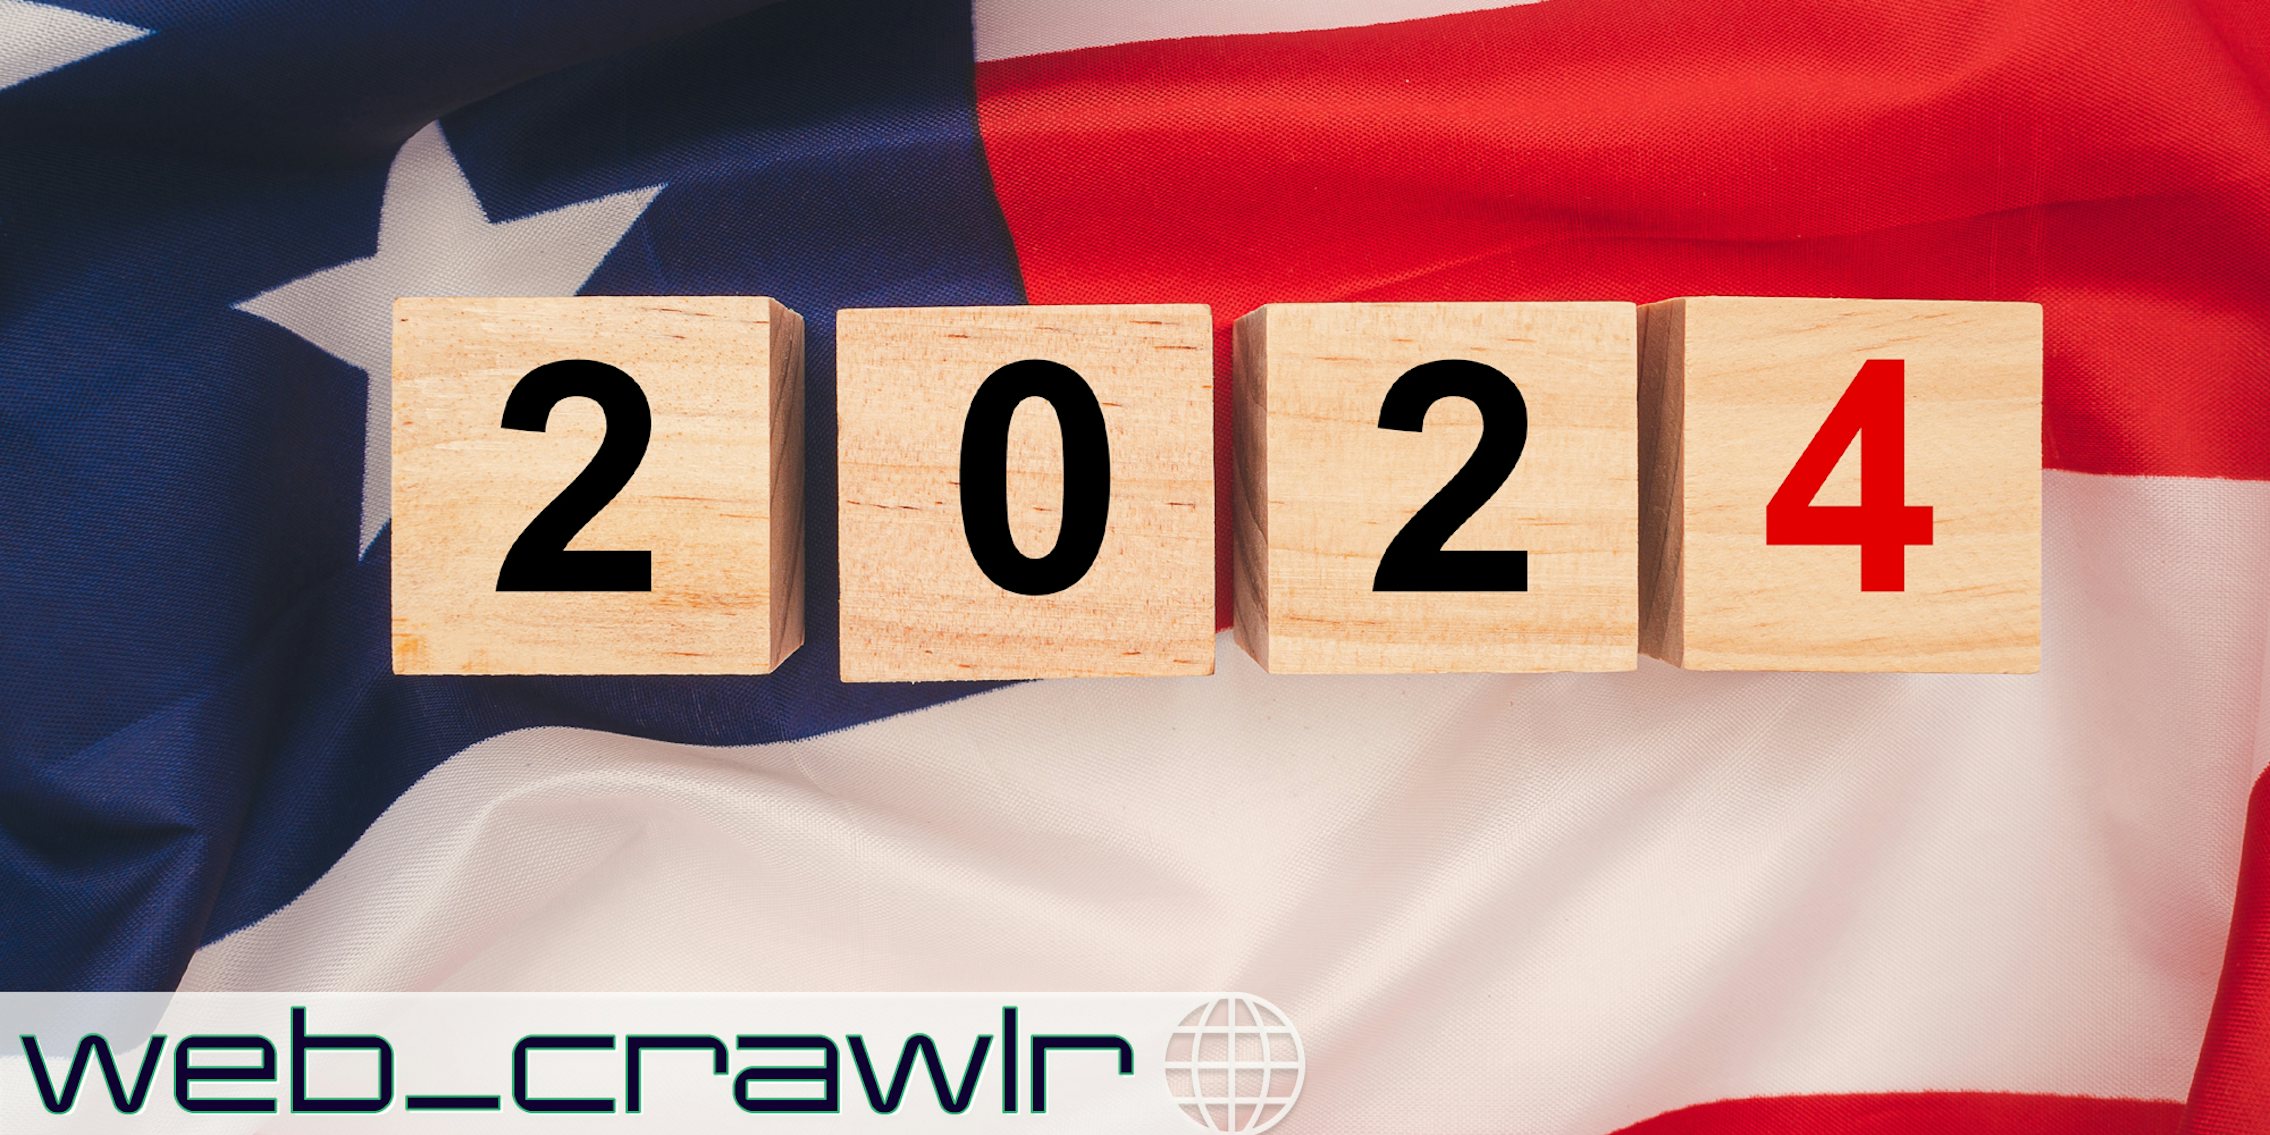 Blocks spelling out '2024' on an American flag. The Daily Dot newsletter web_crawlr logo is in the bottom left corner.